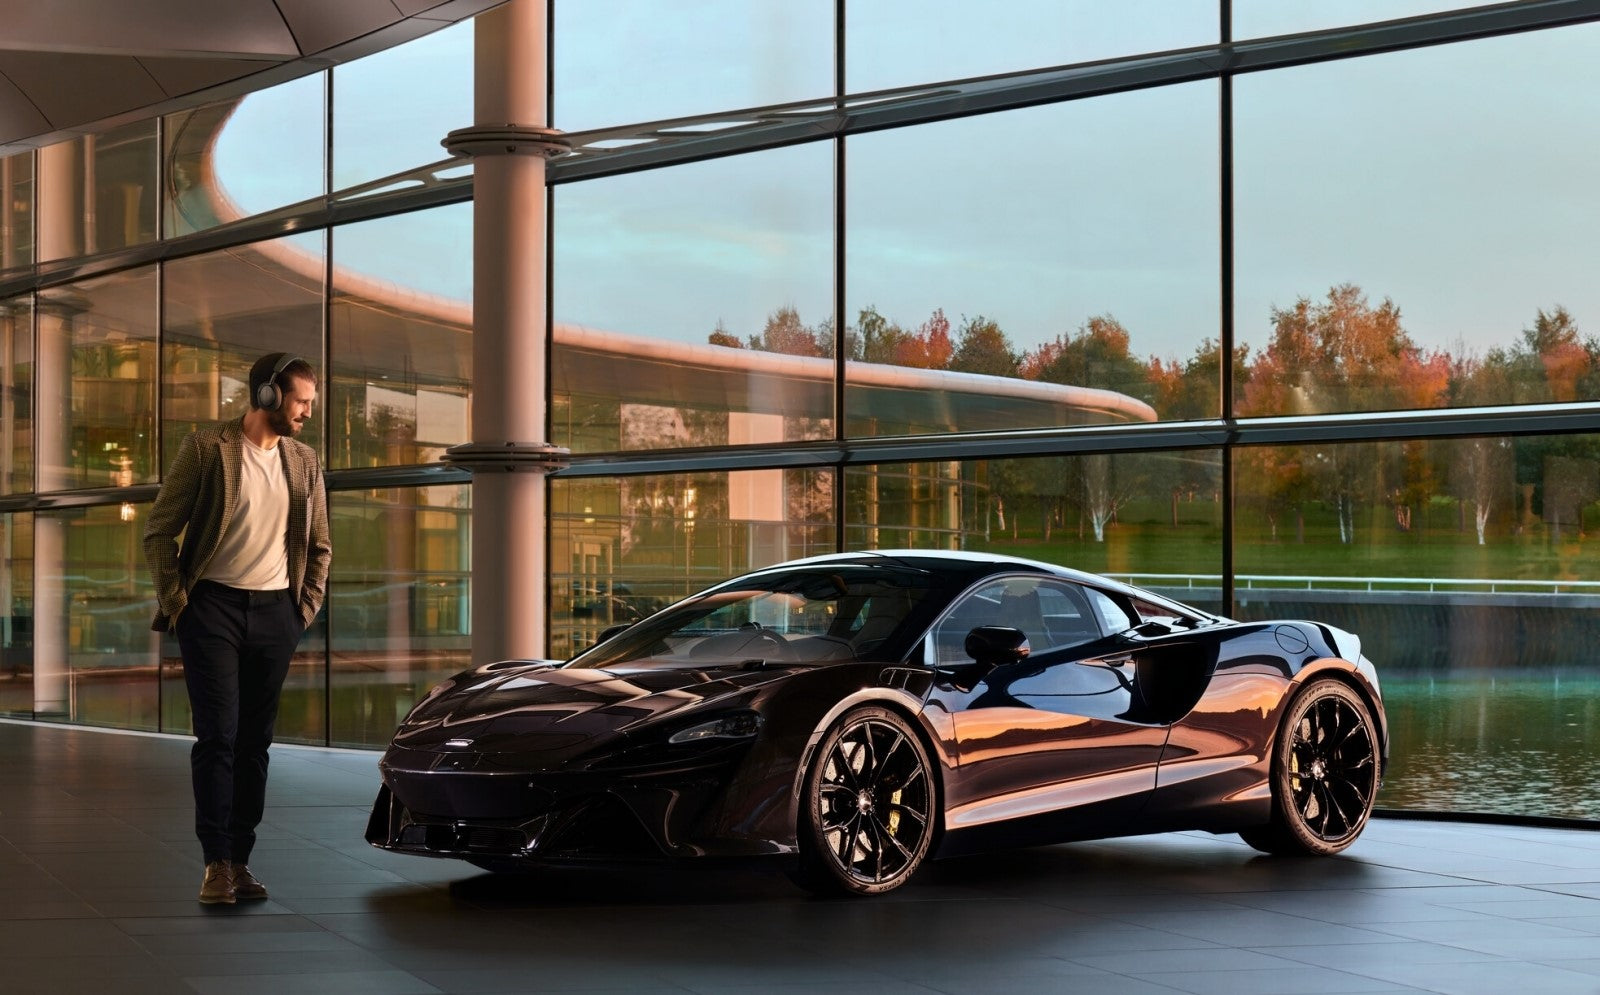 Bowers & Wilkins x McLaren Automotive Collaboration: Unleashing Unparalleled Audio Performance.